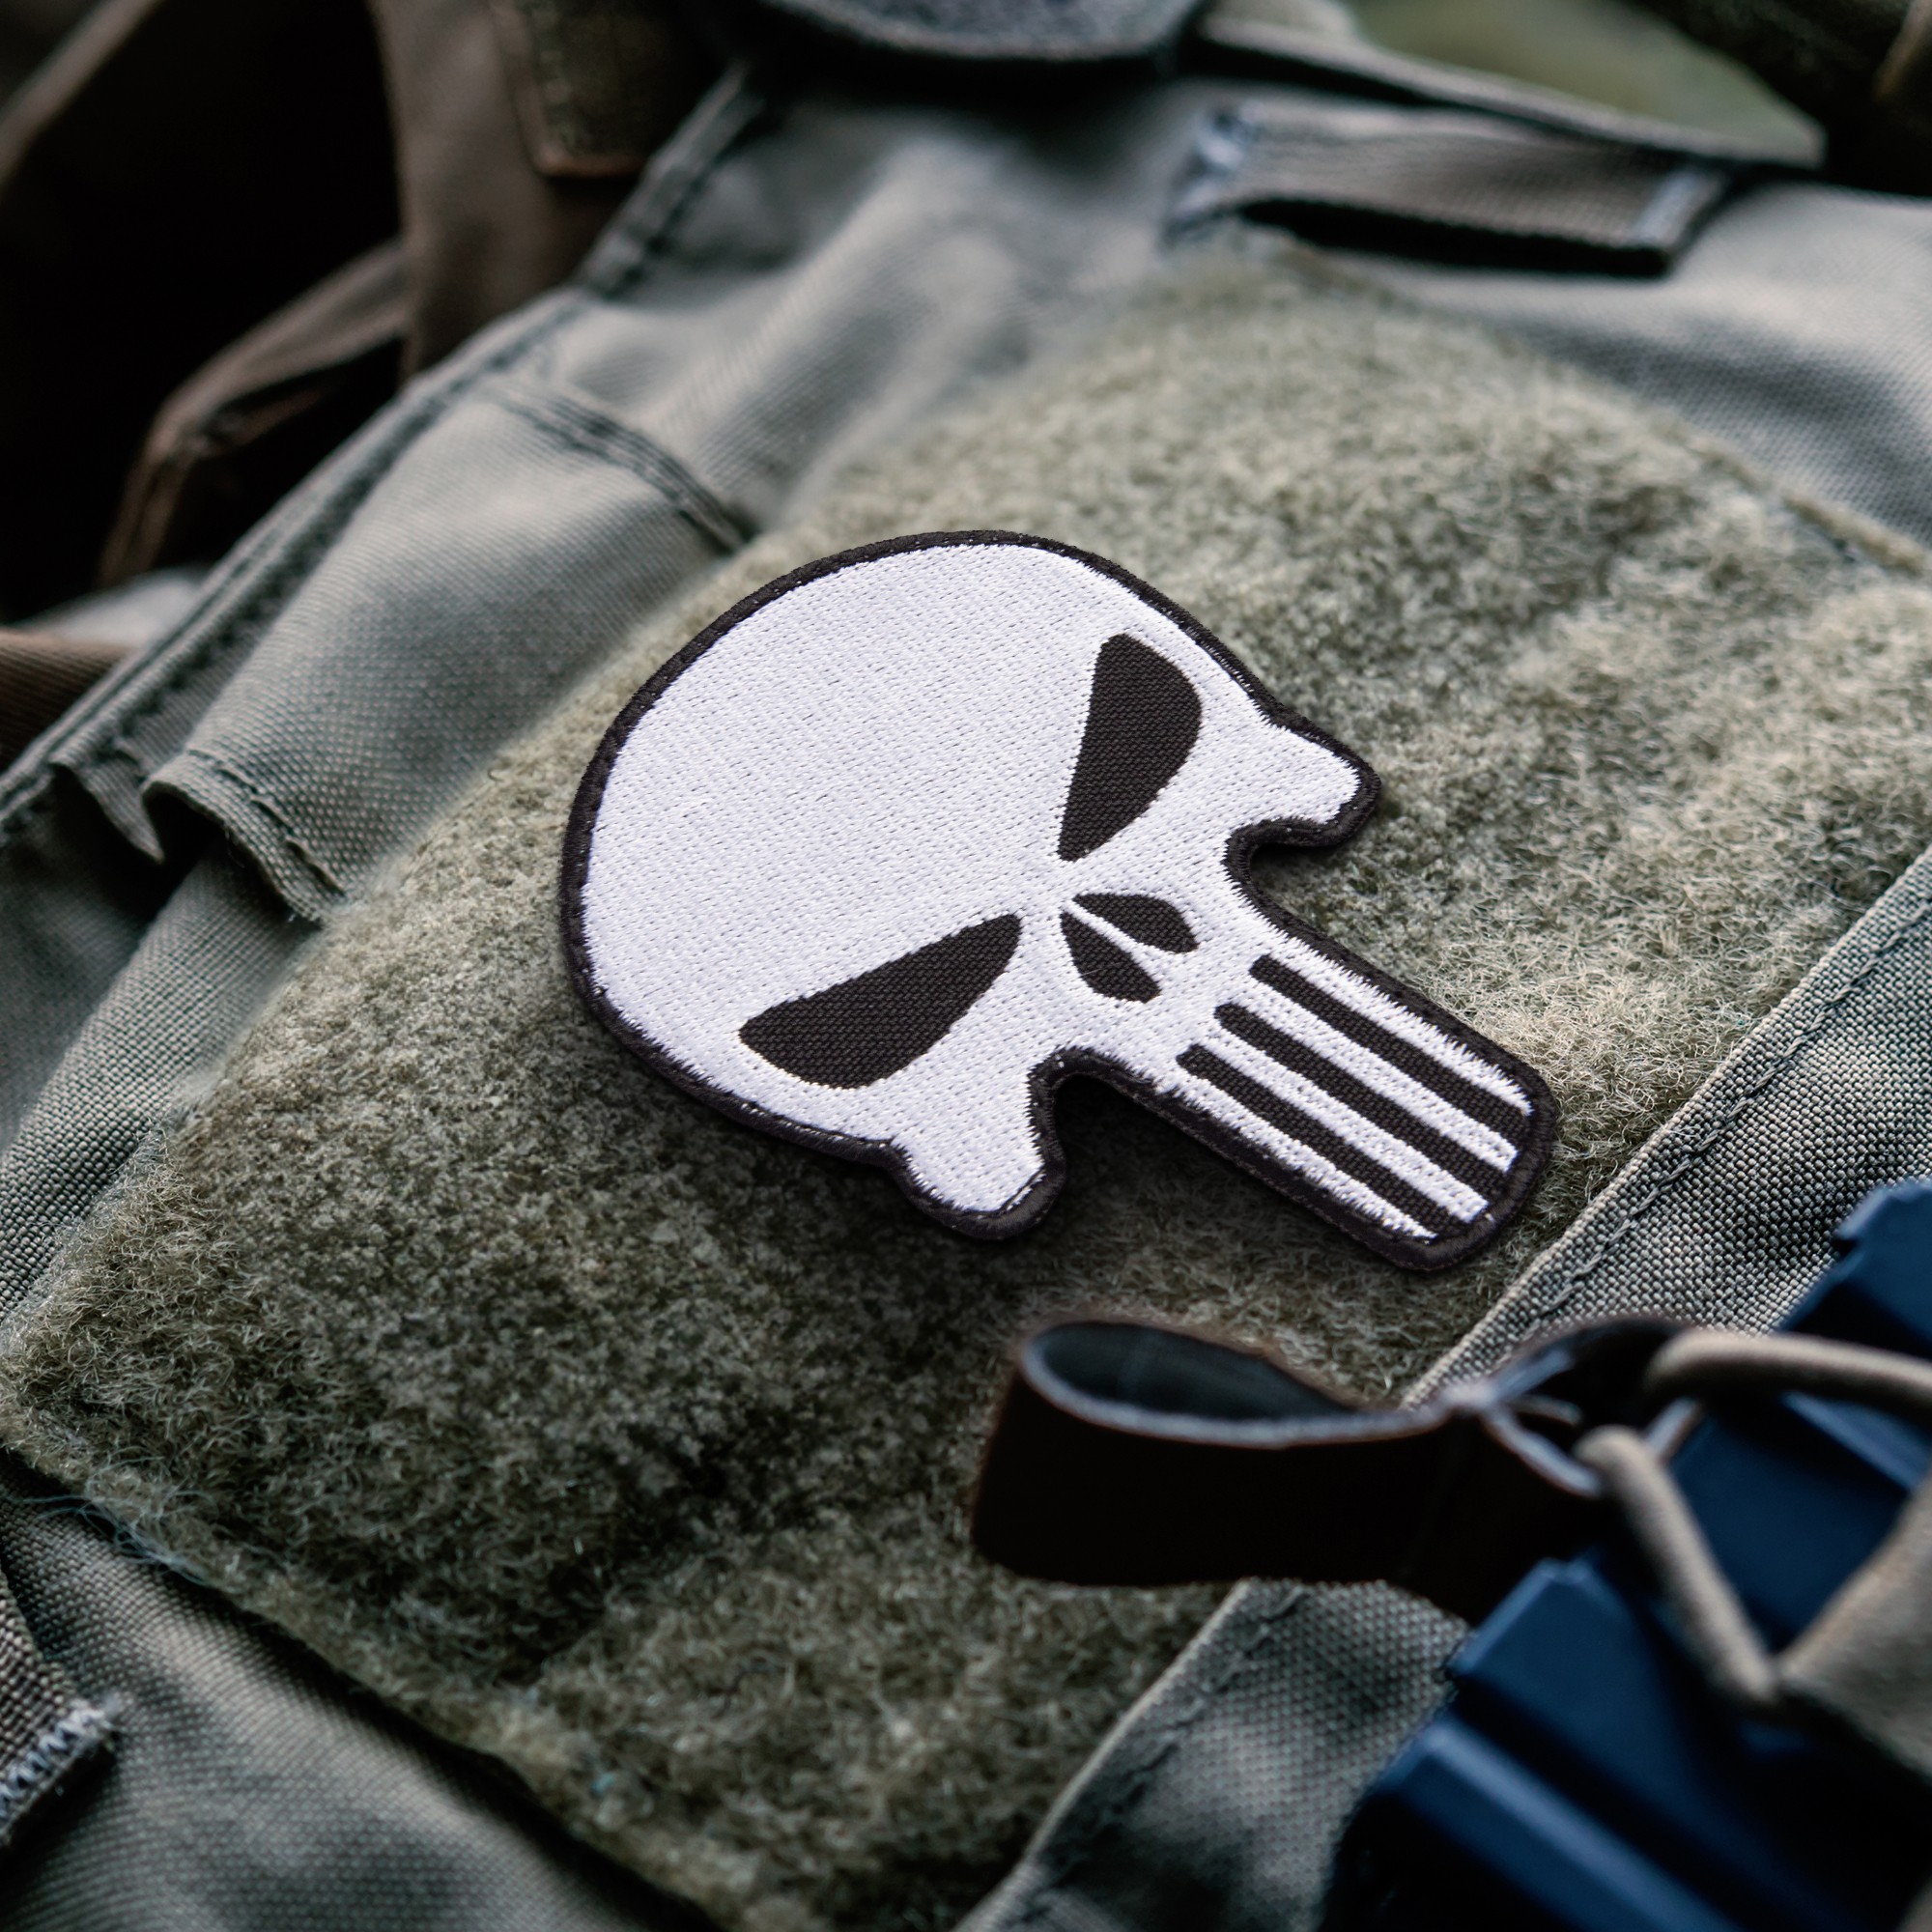 Skull Punisher Velcro Patch - Motivational Symbol for Your Attire 2 pcs